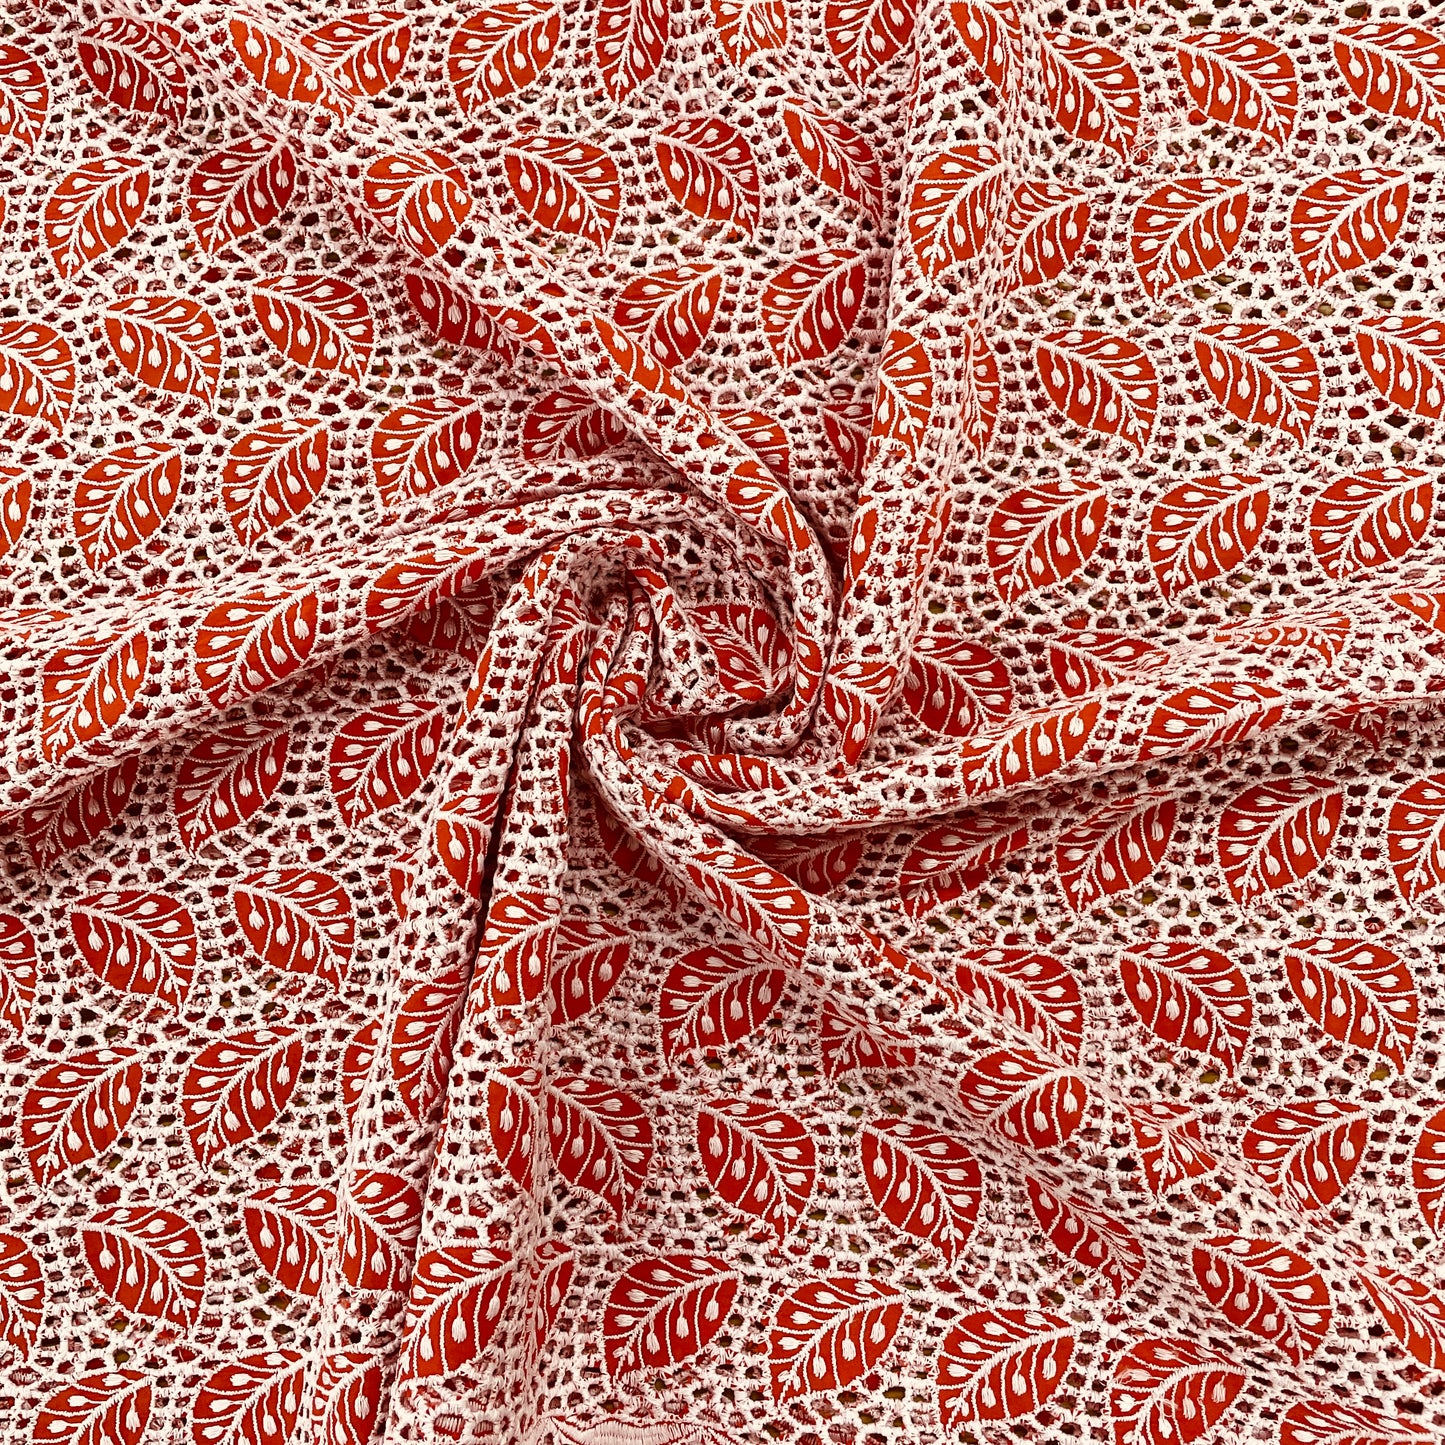 Orange & White Floral Schiffli Embroidery Cotton Fabric